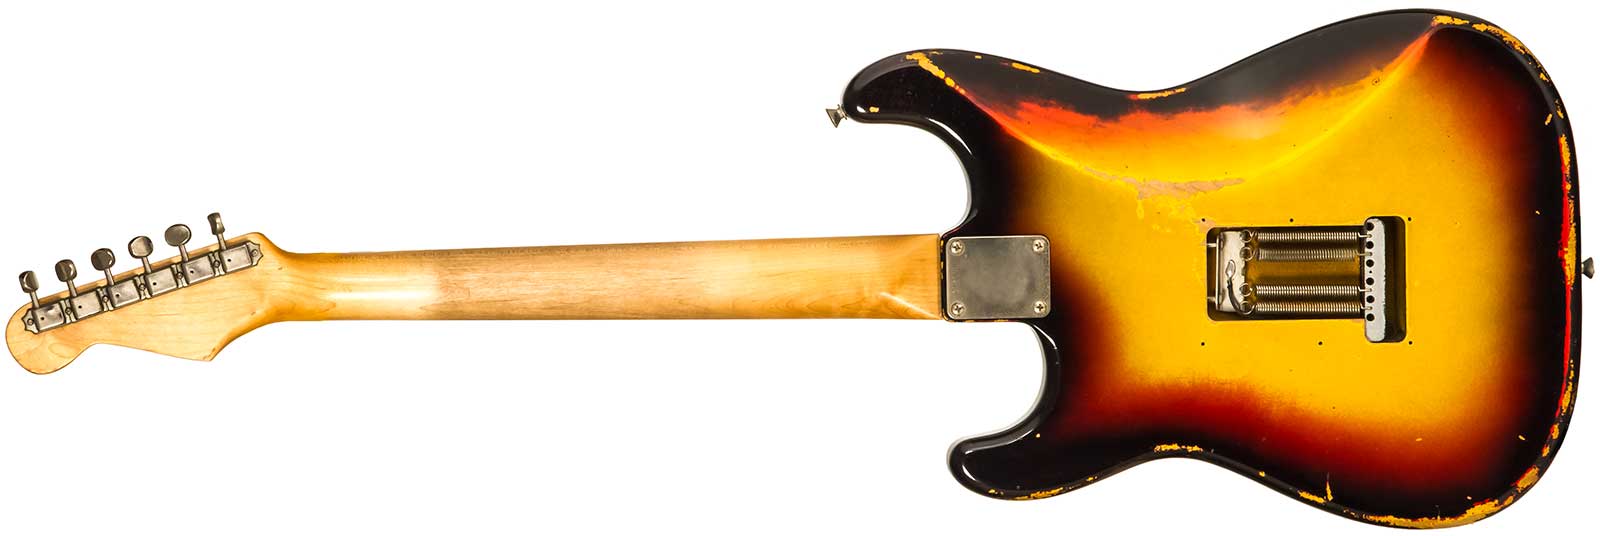 Rebelrelic S-series 1962 3s Trem Rw #231009 - 3-tone Sunburst - E-Gitarre in Str-Form - Variation 1